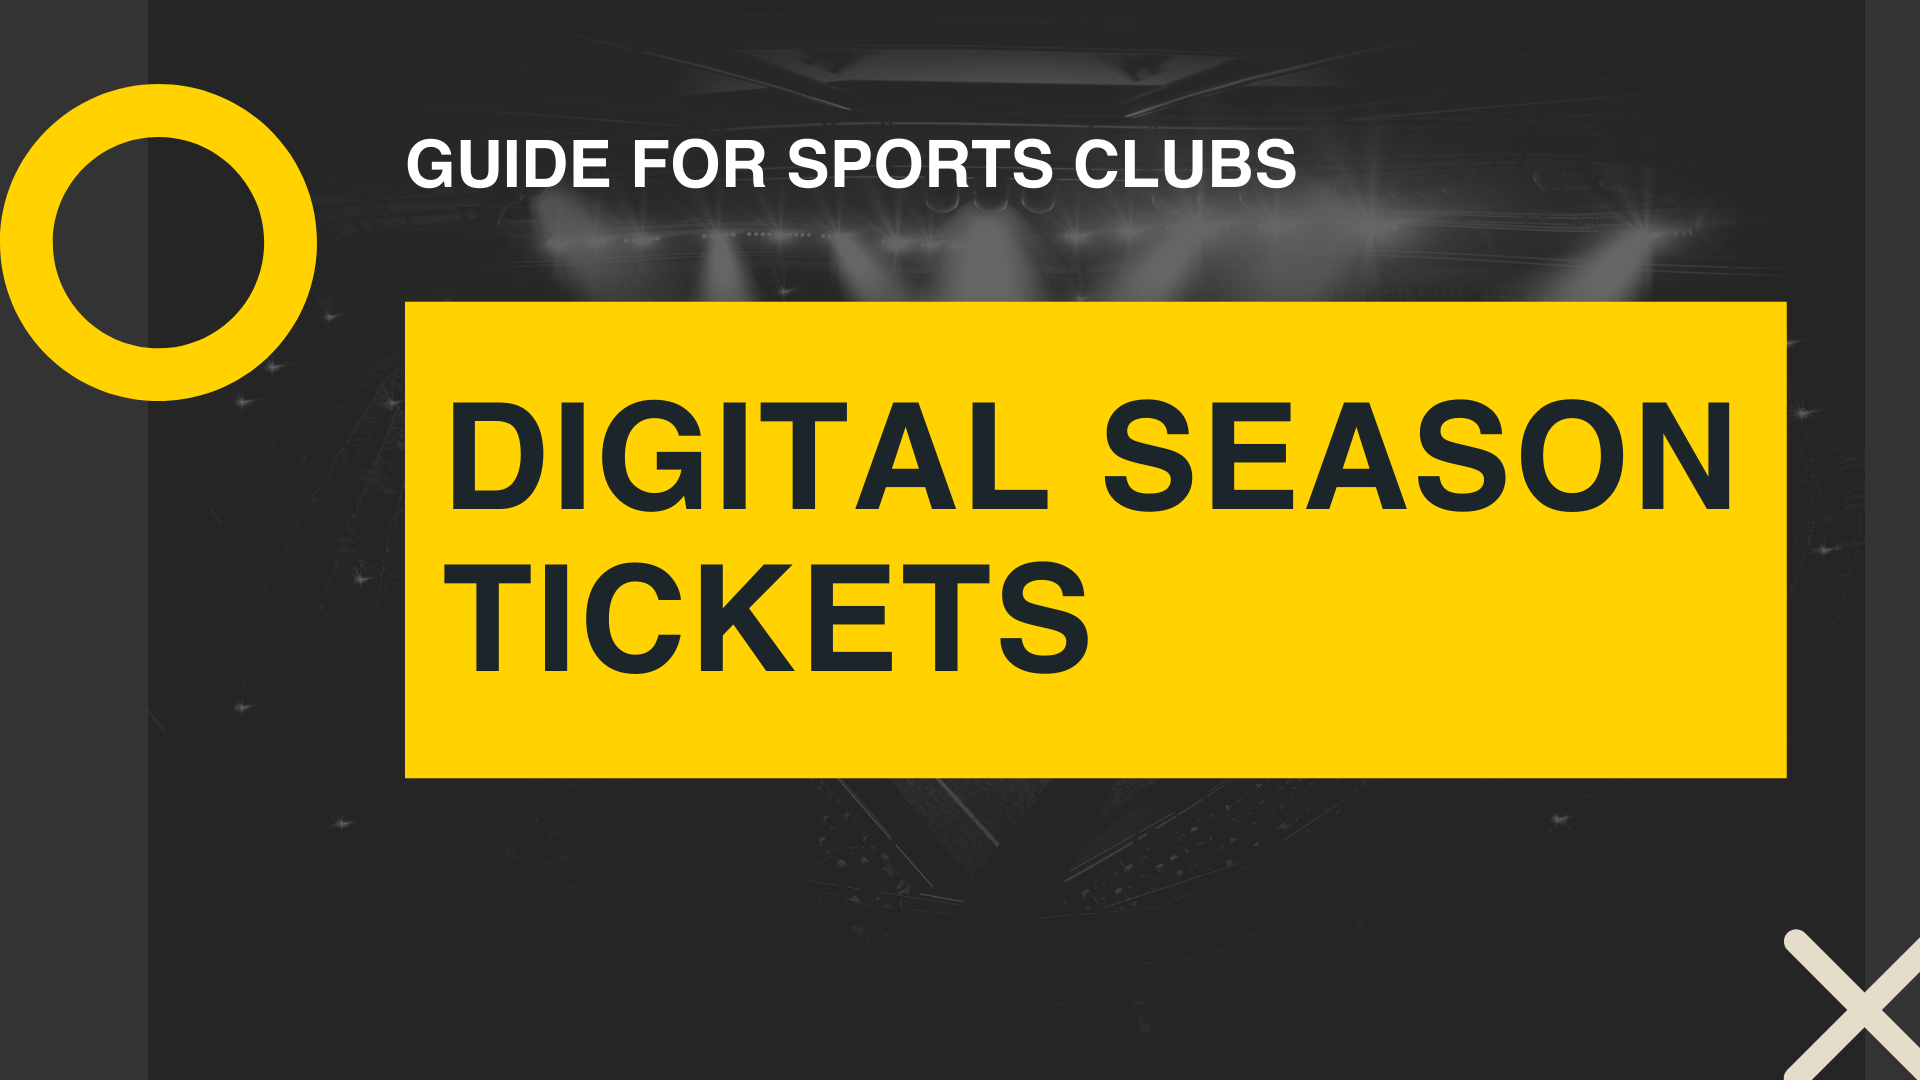 Digital-season-tickets-guide-for-sports-clubs-header